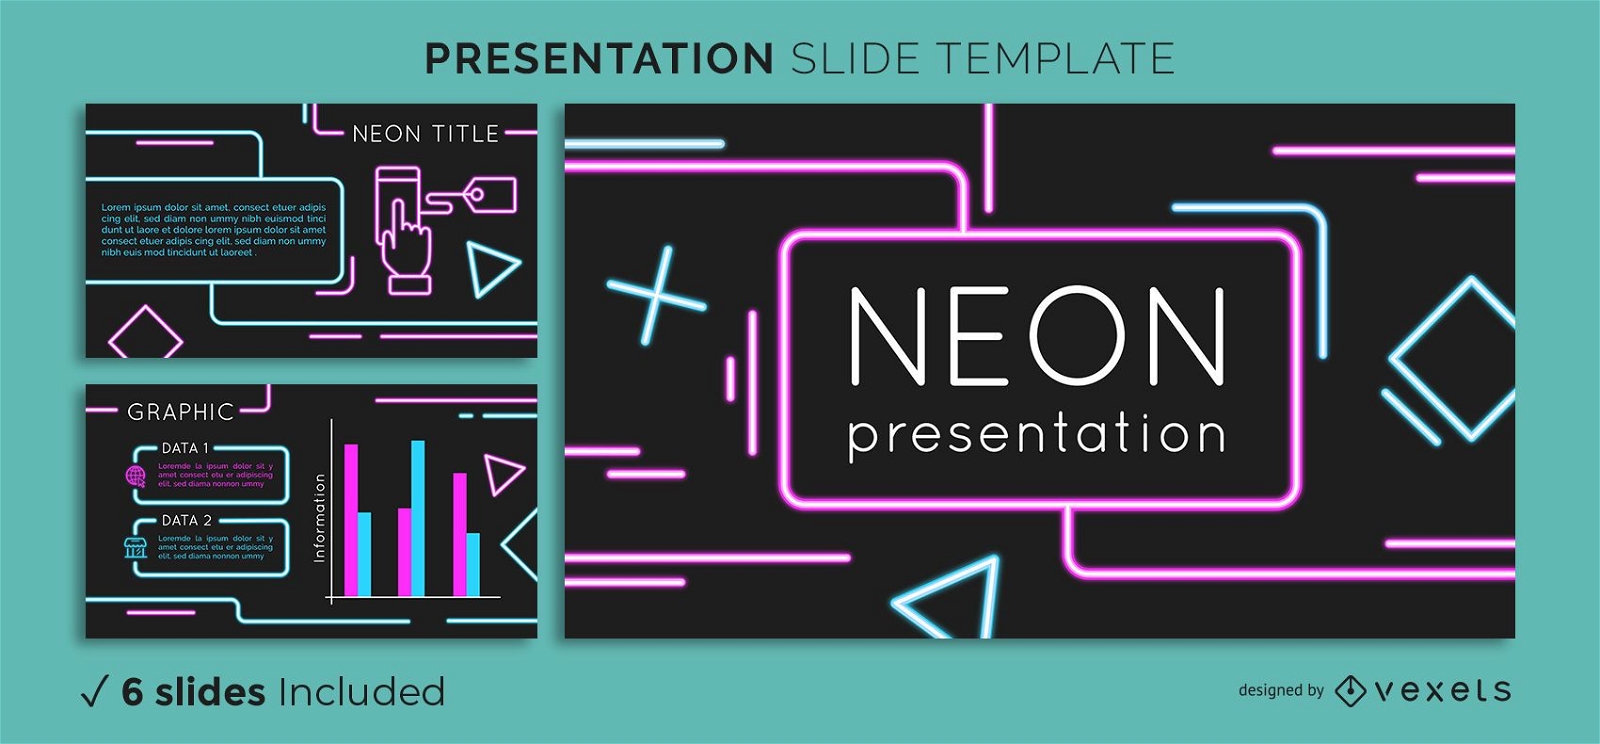 Neon Presentation Template